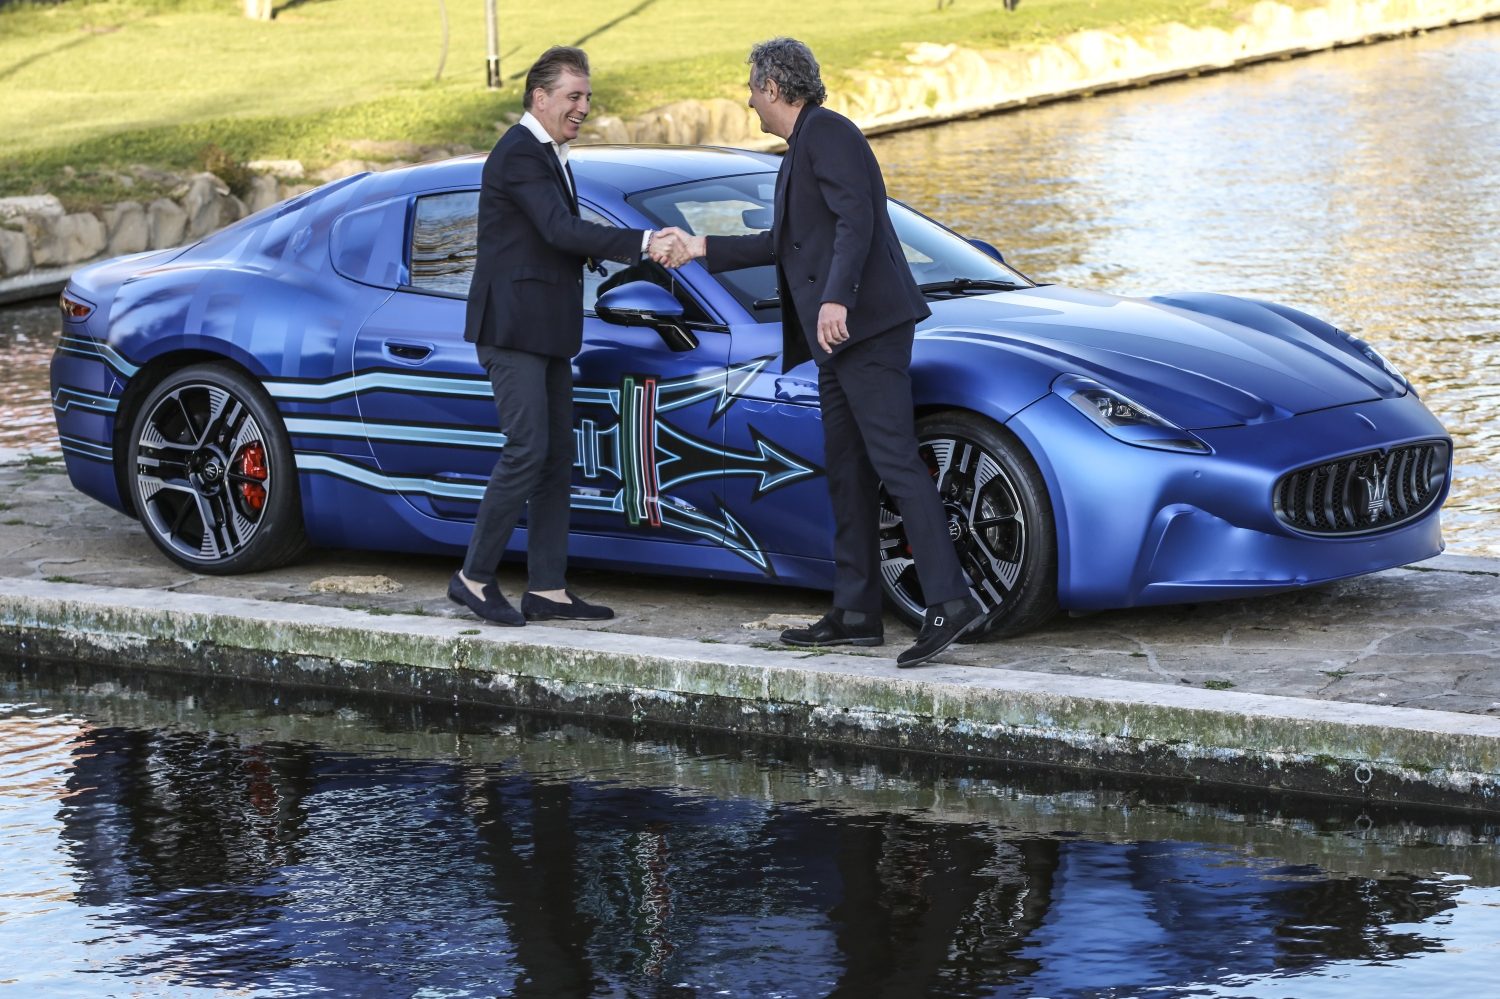 Maserati and Rokit Venturi racing agreeing a Formula E partnership